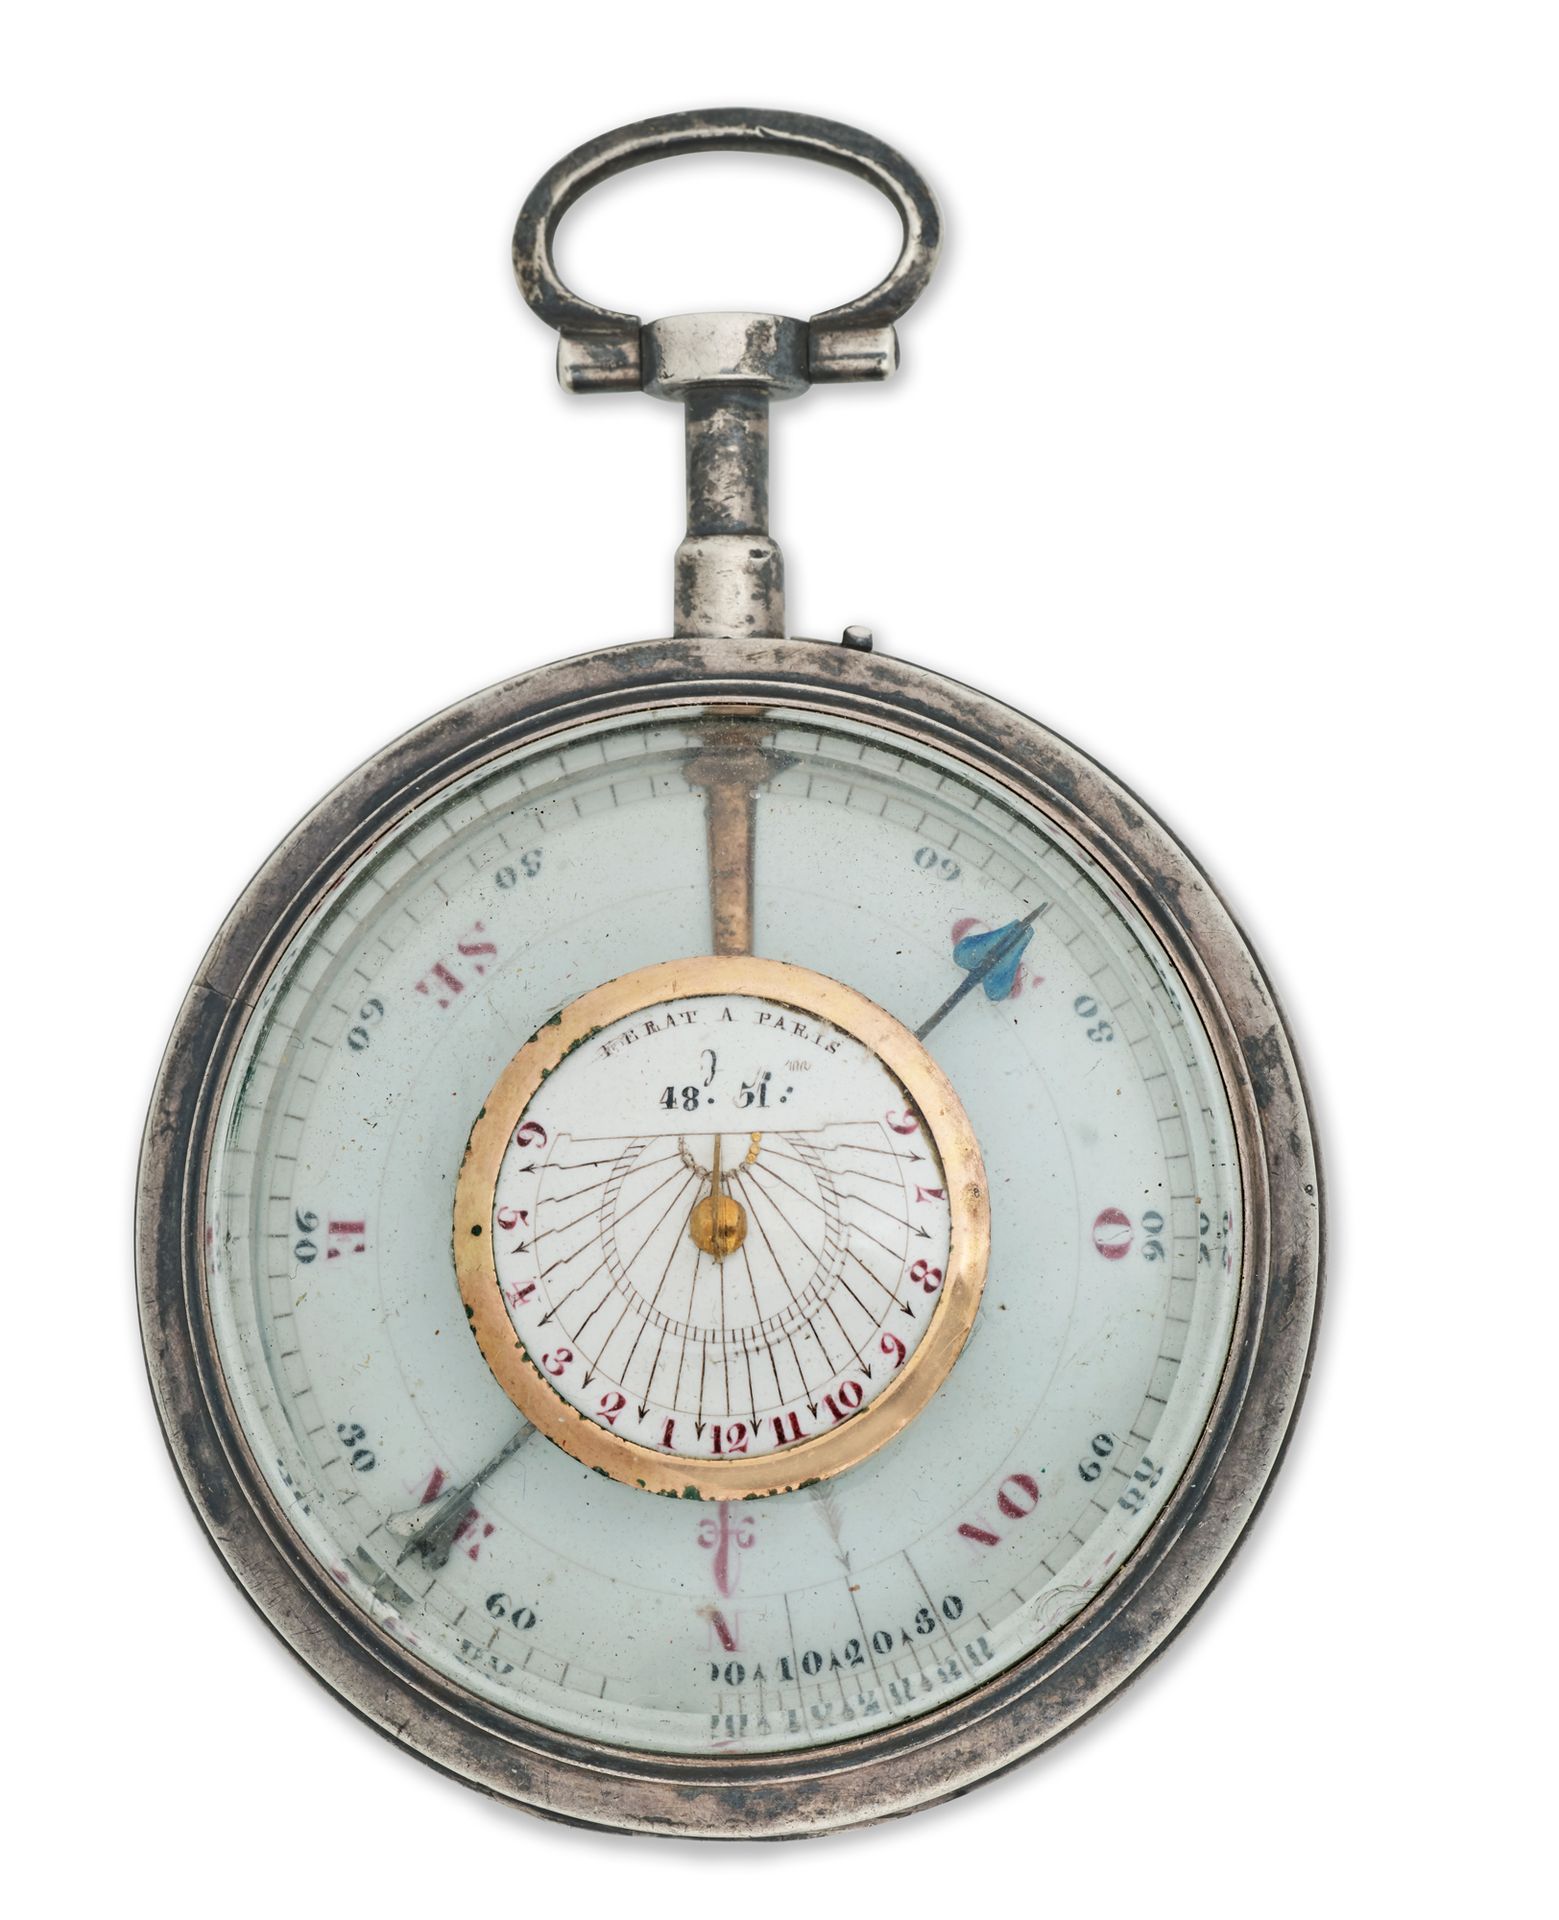 Null 
带有朗布托伯爵徽章的桁架式银质日晷

巴黎纬度的表盘（48°51），在巴黎签署了FERAT。

18世纪末-19世纪初 

毛重 : 86,22 g&hellip;